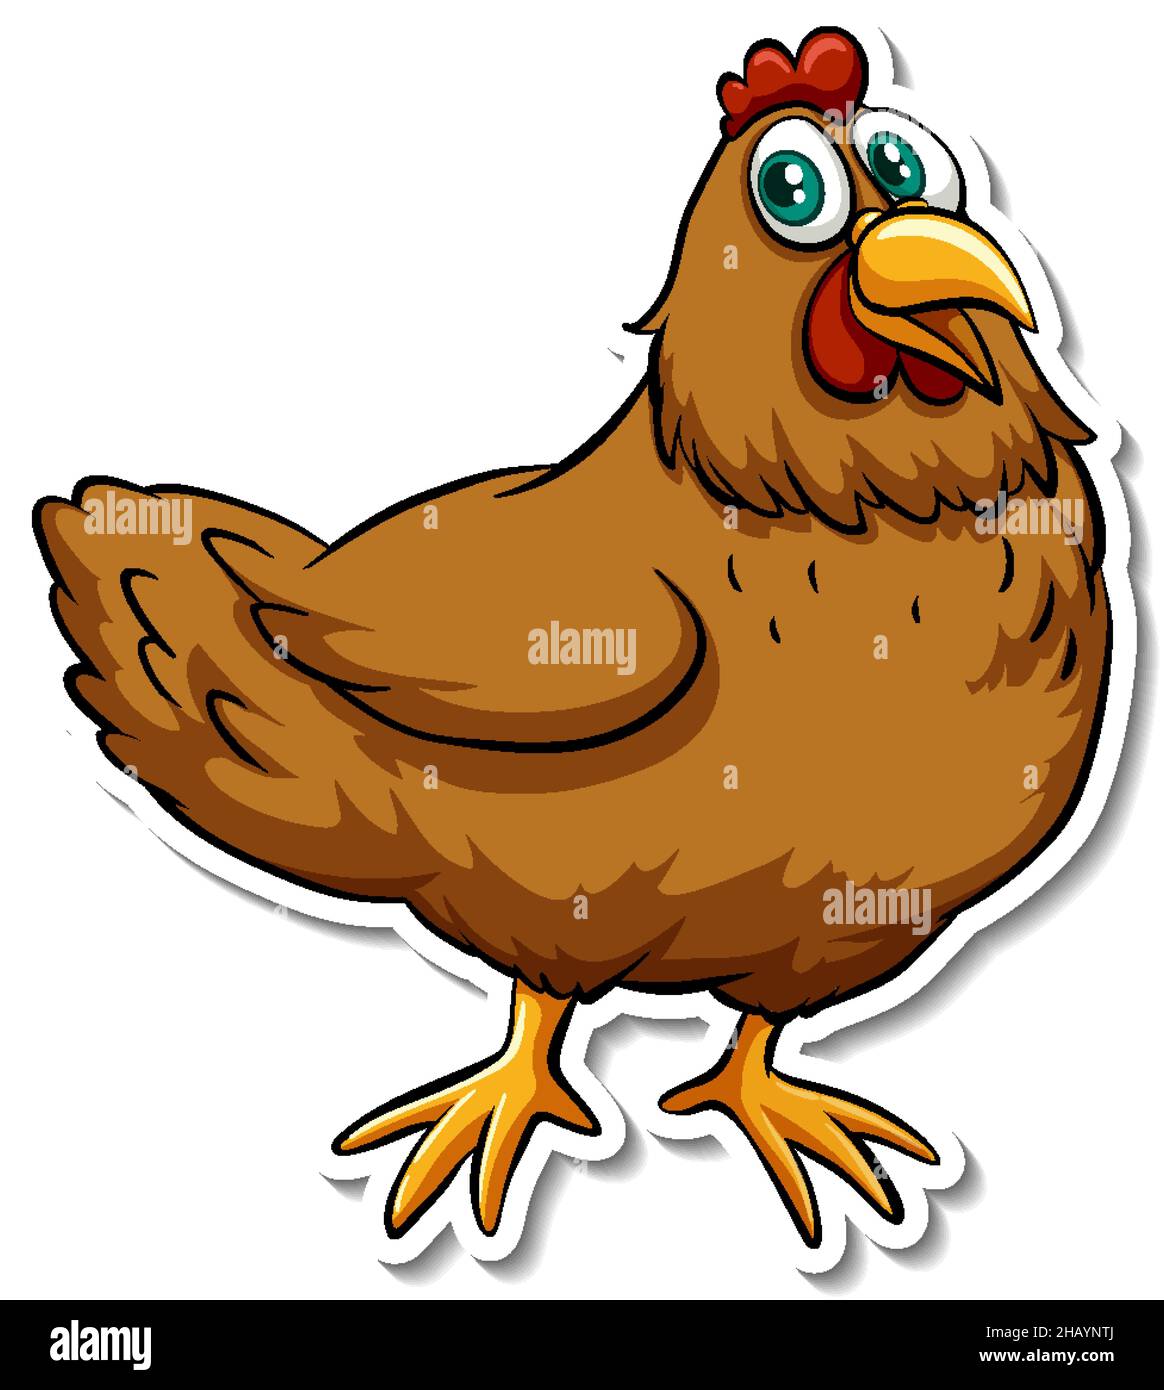 Illustration de l'autocollant de dessin animé d'un animal de ferme de poulet Illustration de Vecteur